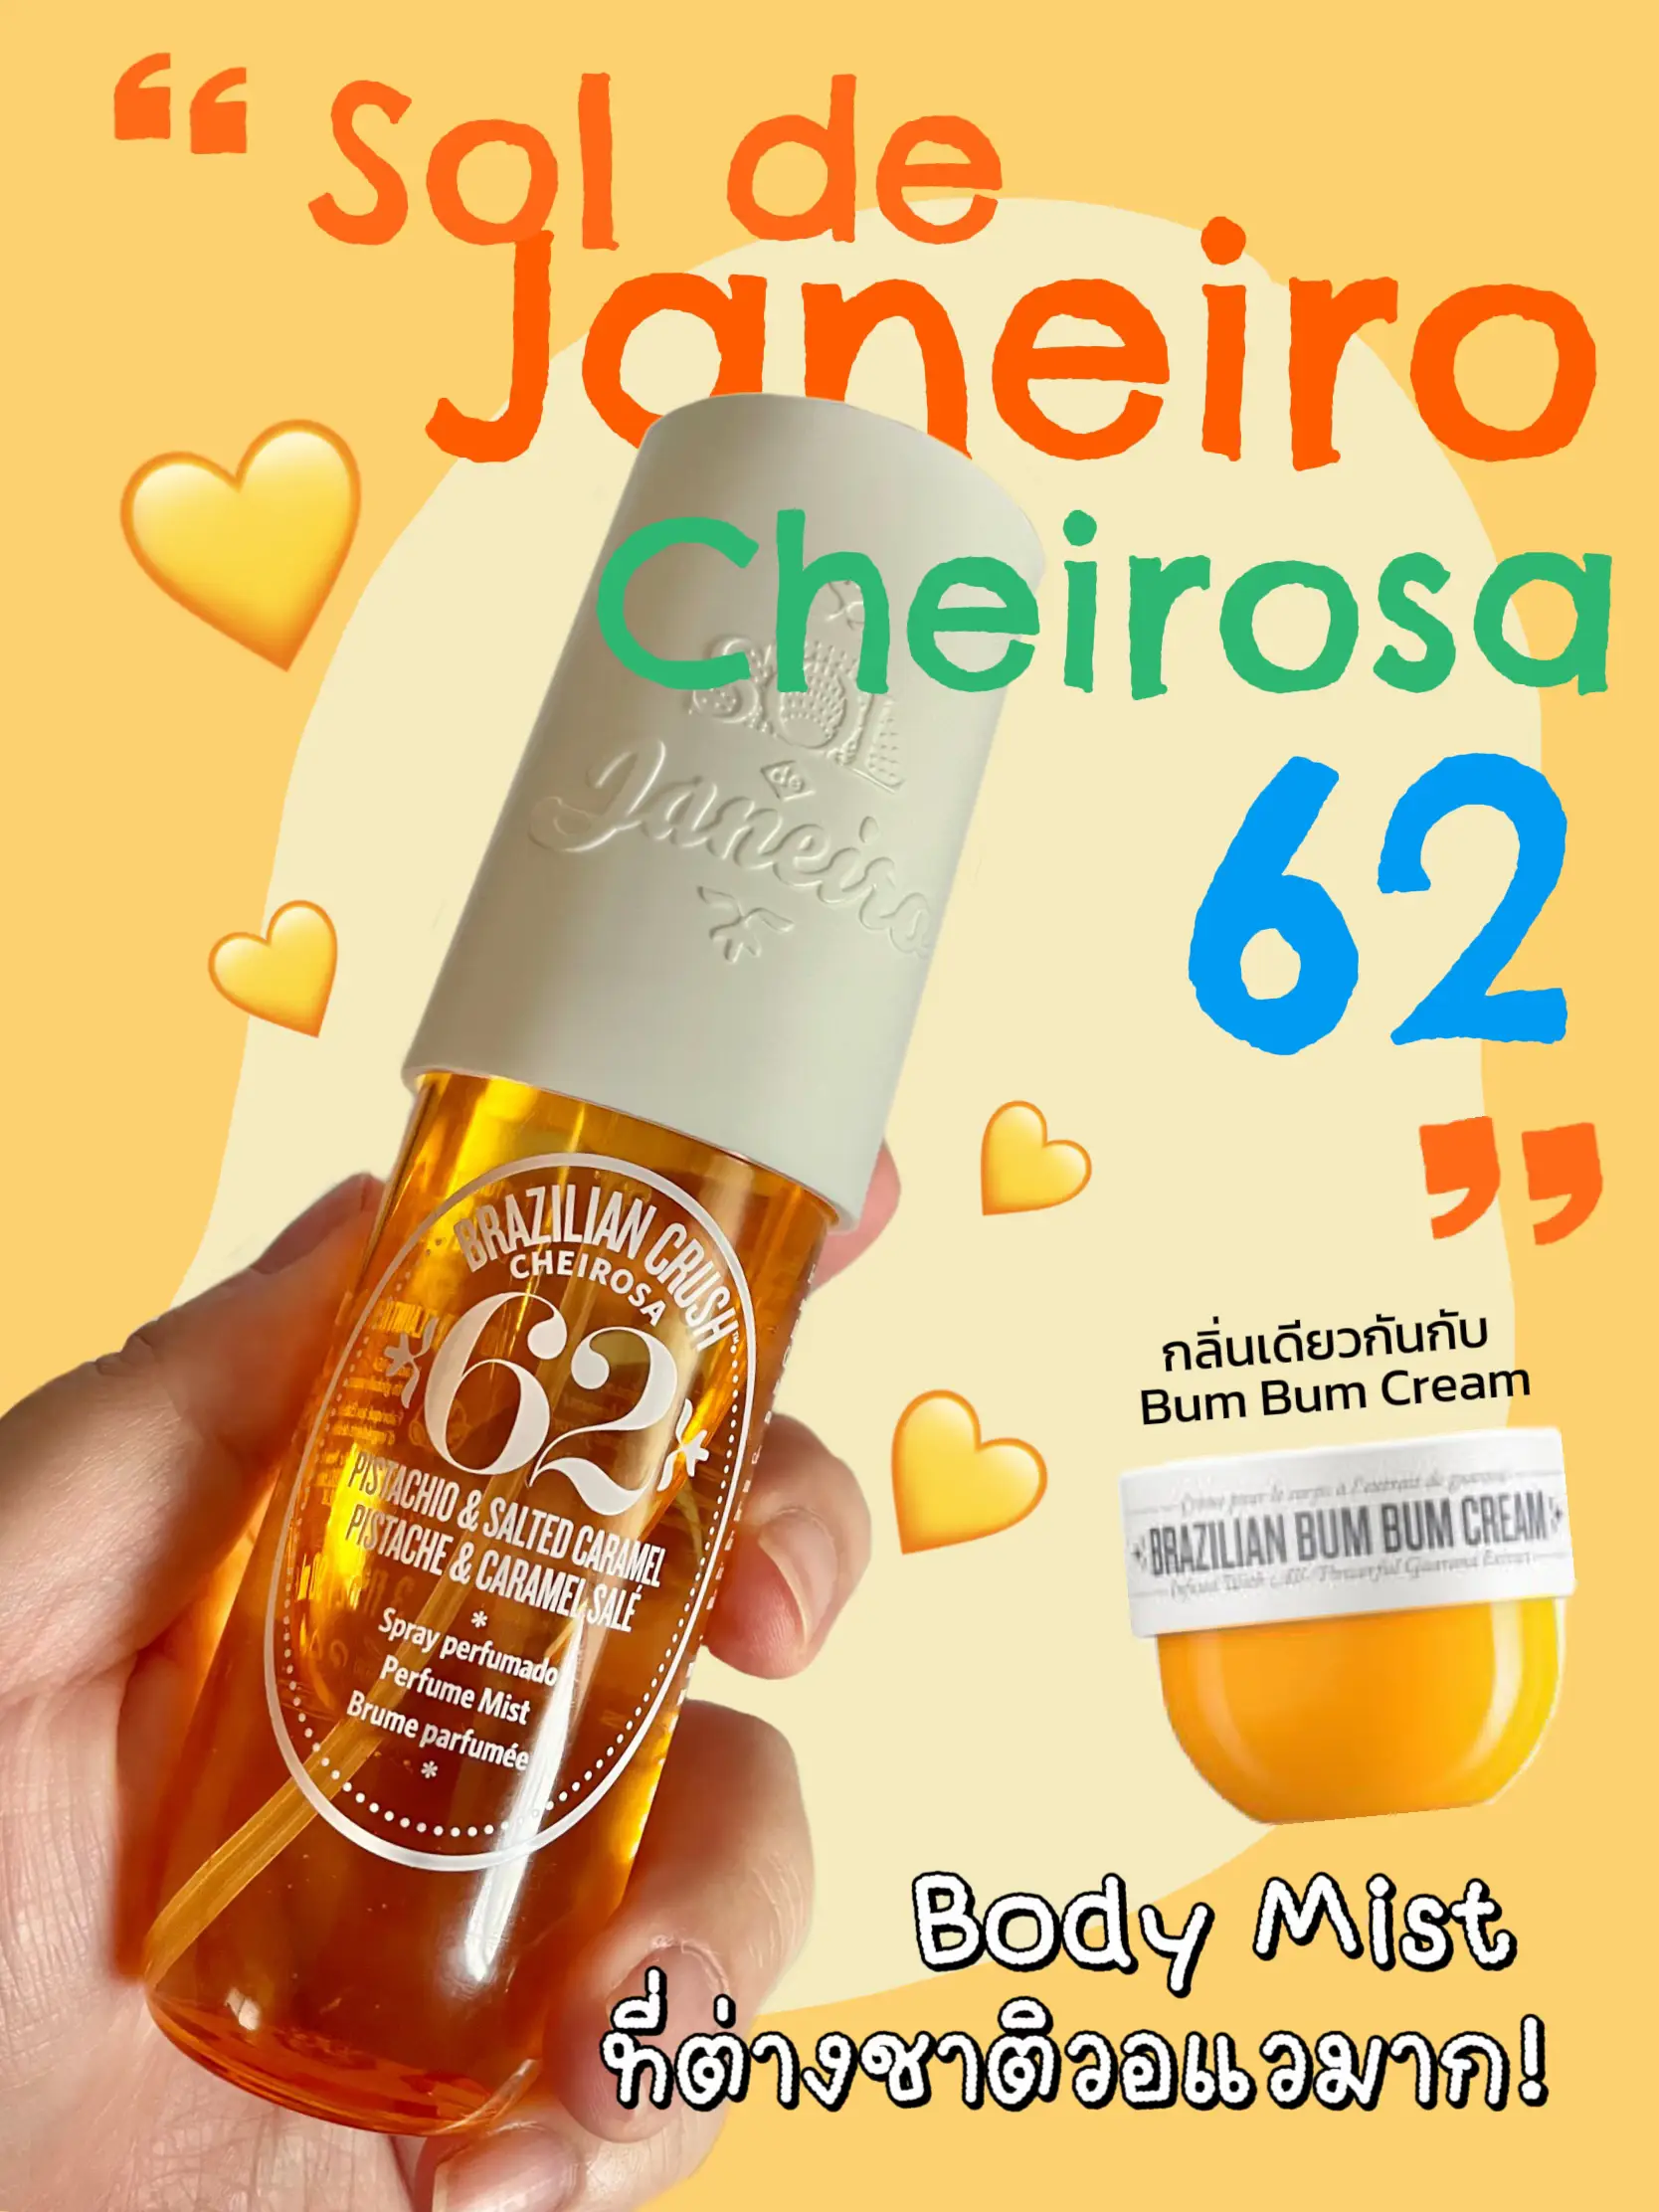 Cheirosa 62 Perfume Mist - Sol de Janeiro